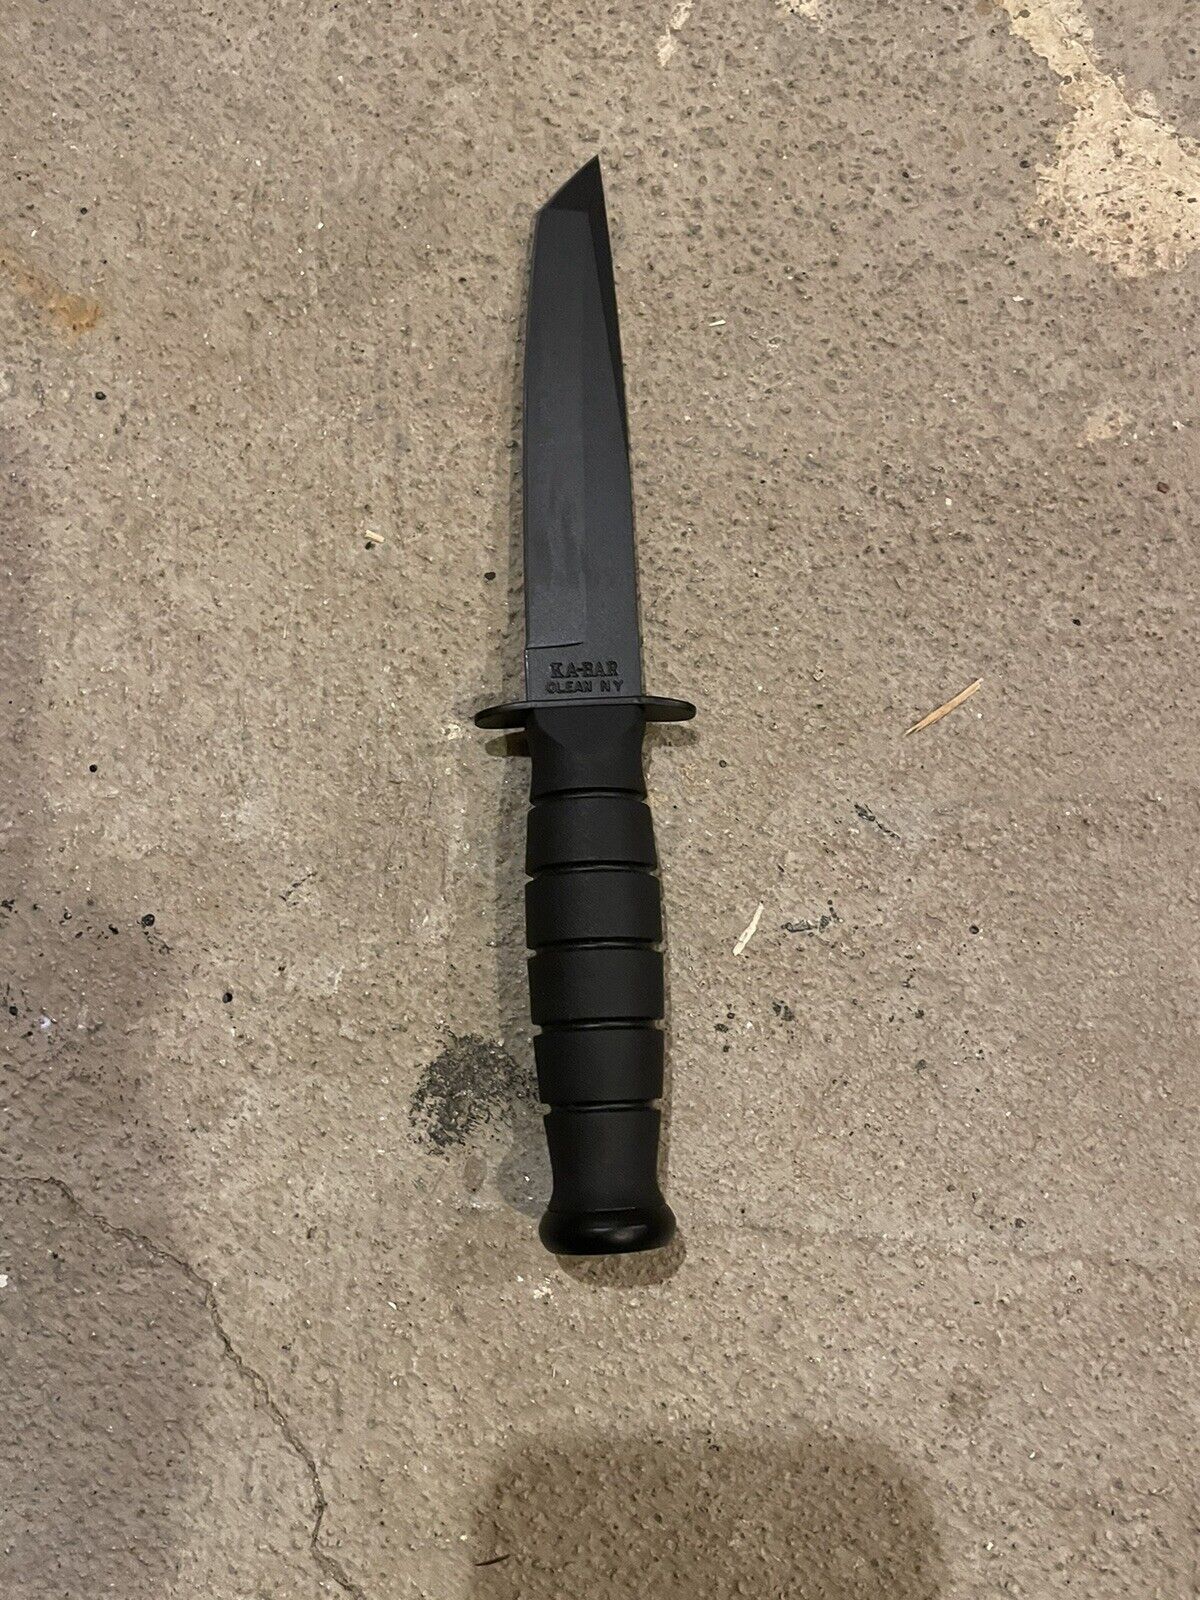 KaBar knife, 5 inch tanto blade